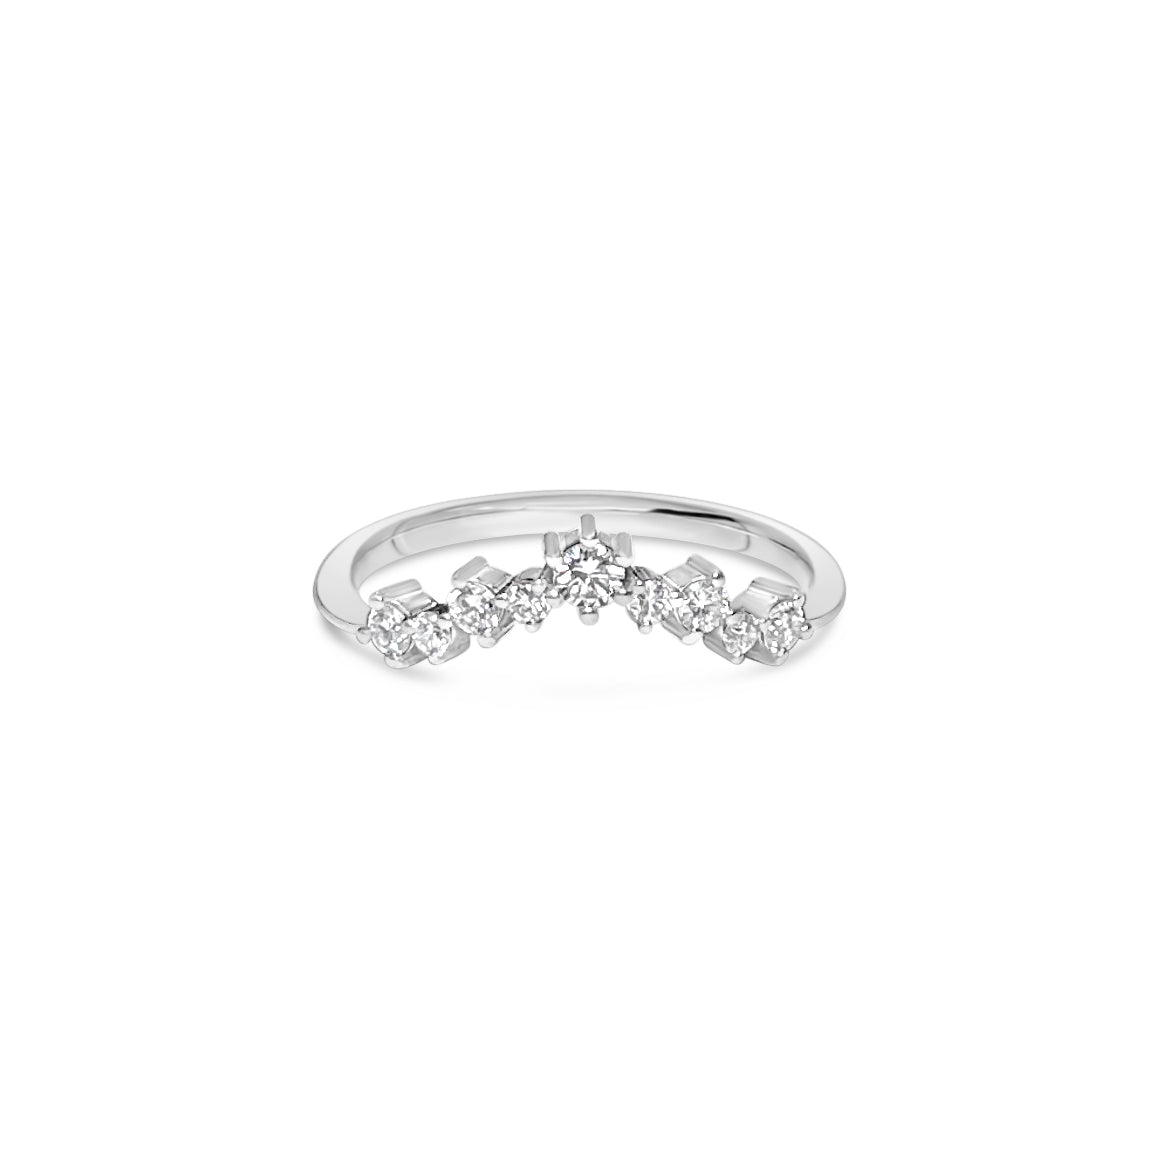 STARRY NIGHT || diamond wedding band - LOFT.bijoux || Custom jewelry & wedding rings / Bijoux sur mesure & bagues de mariage || Montreal